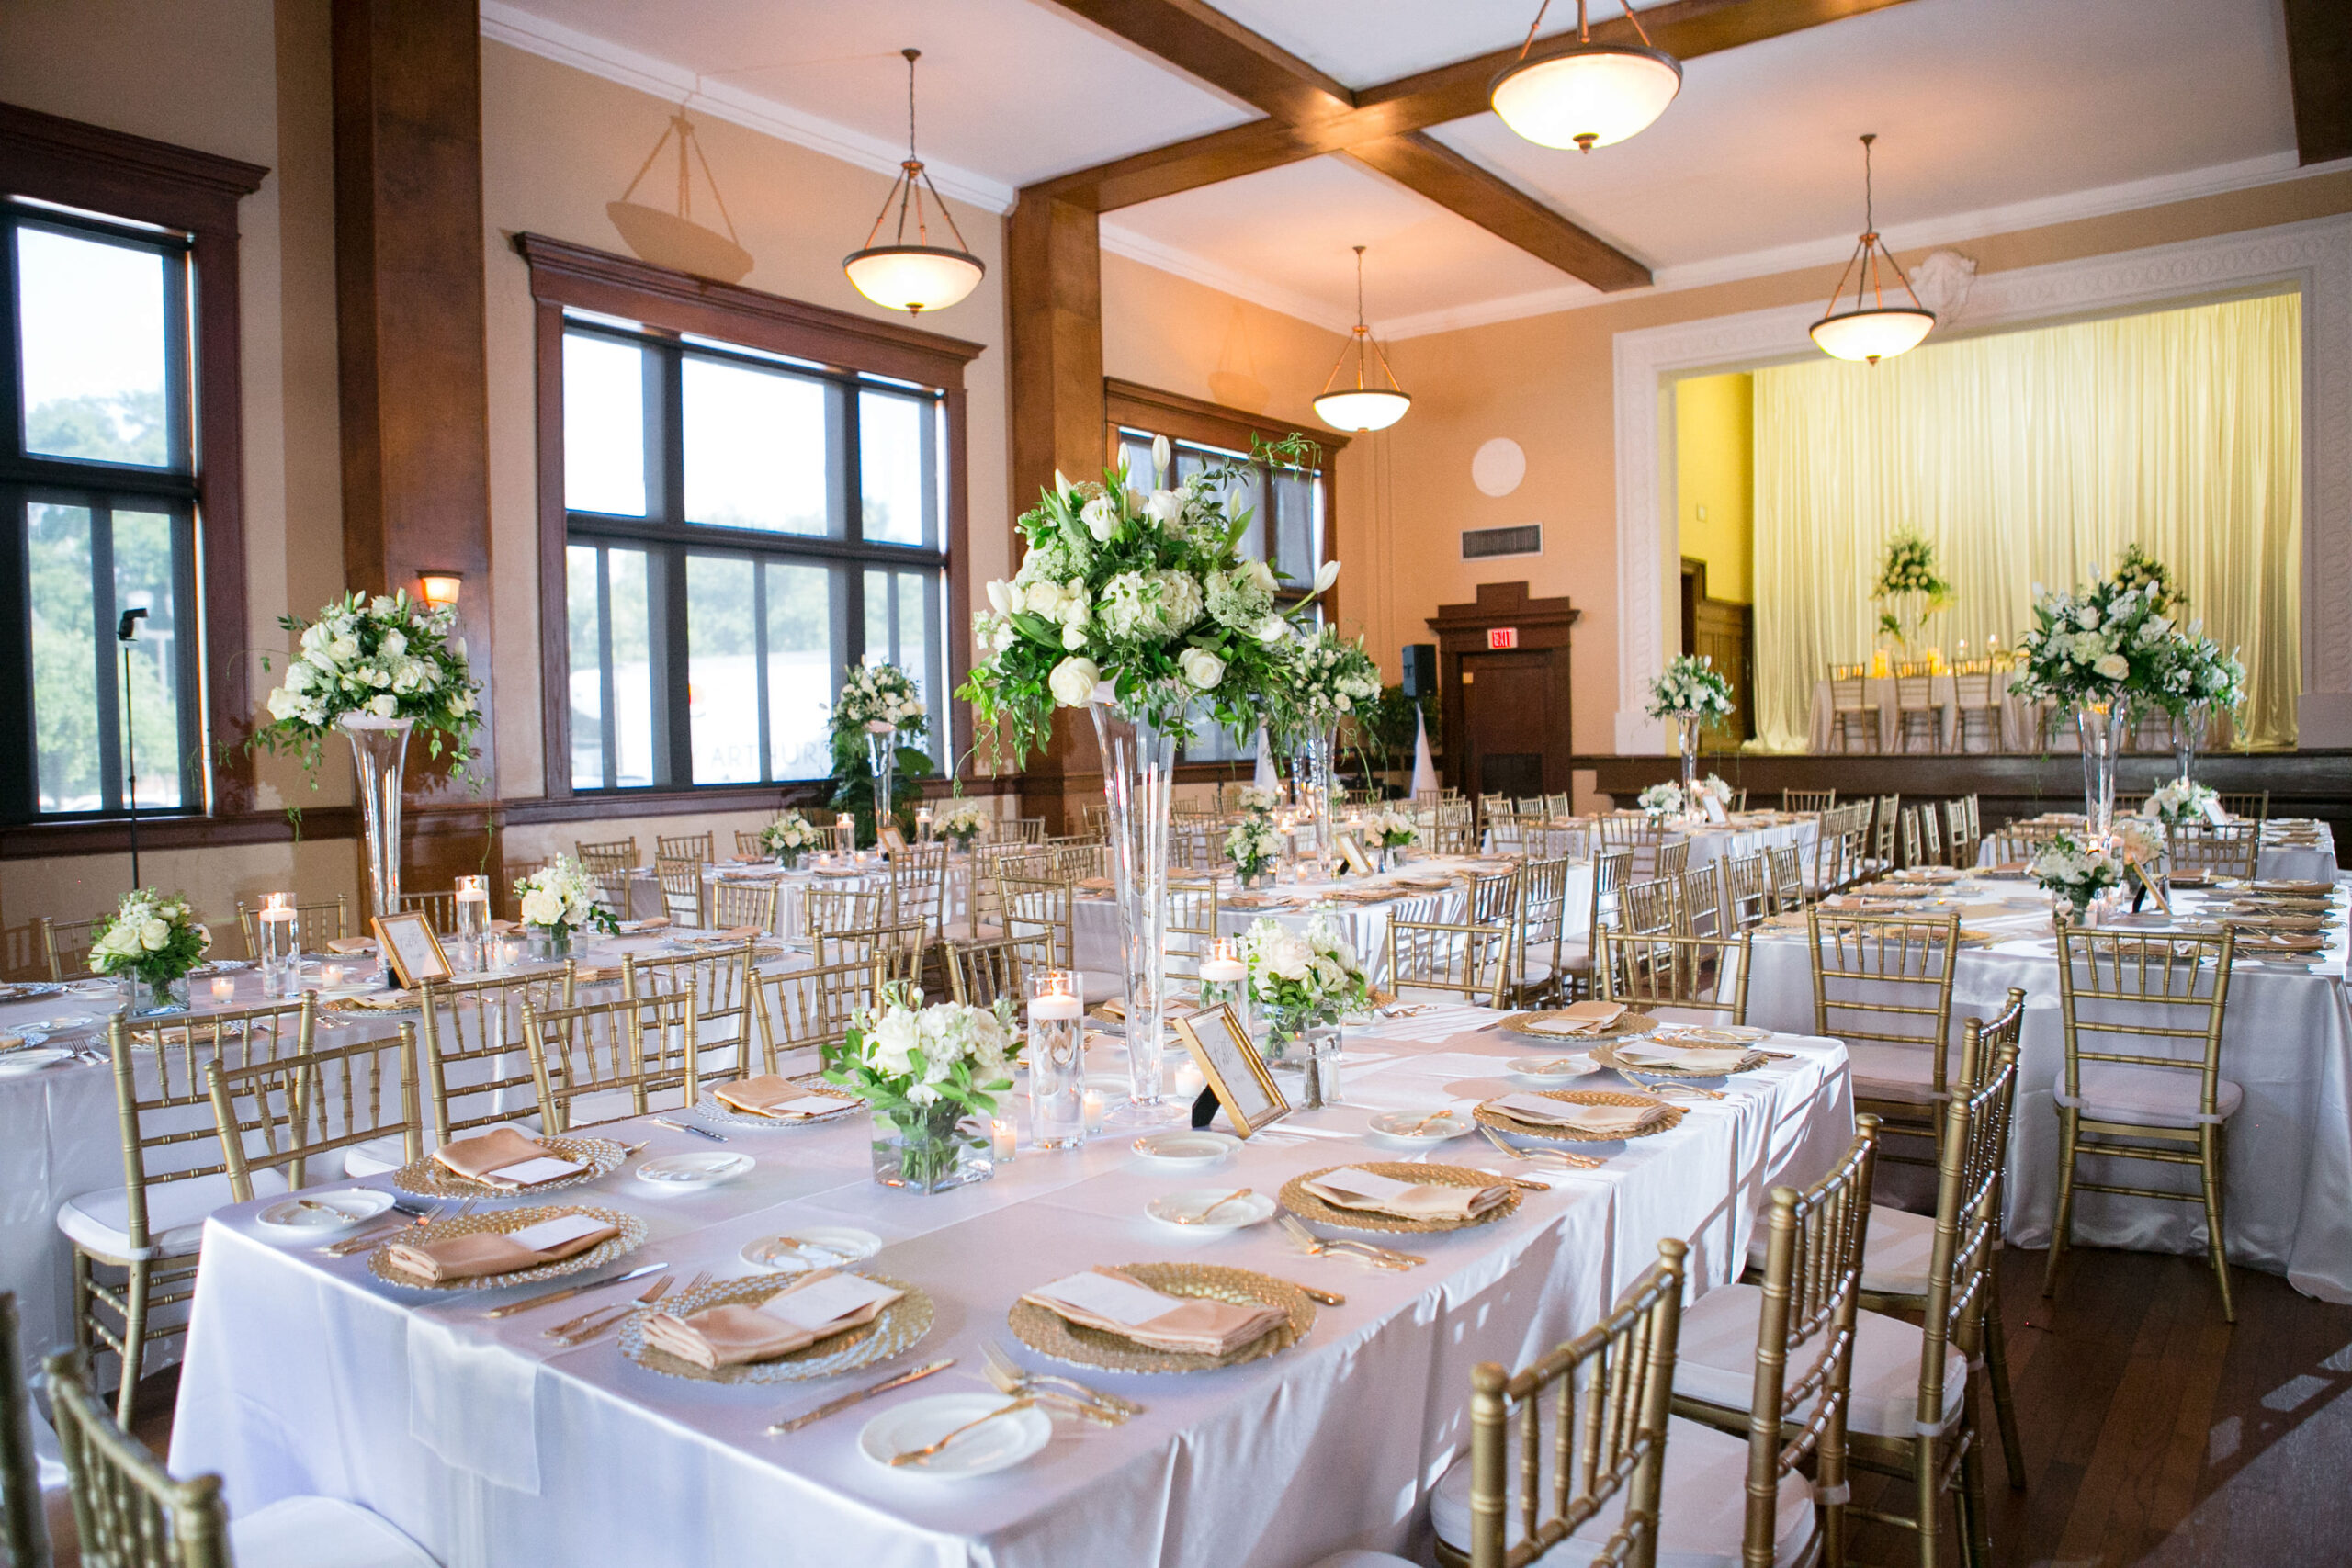 Elegant, Classic White and Gold Wedding Reception Inspiration | Satin Linen, Chiavari ChairsTall Glass Vase with White Roses, Hydrangeas, and Greenery Flower Arrangement Ideas